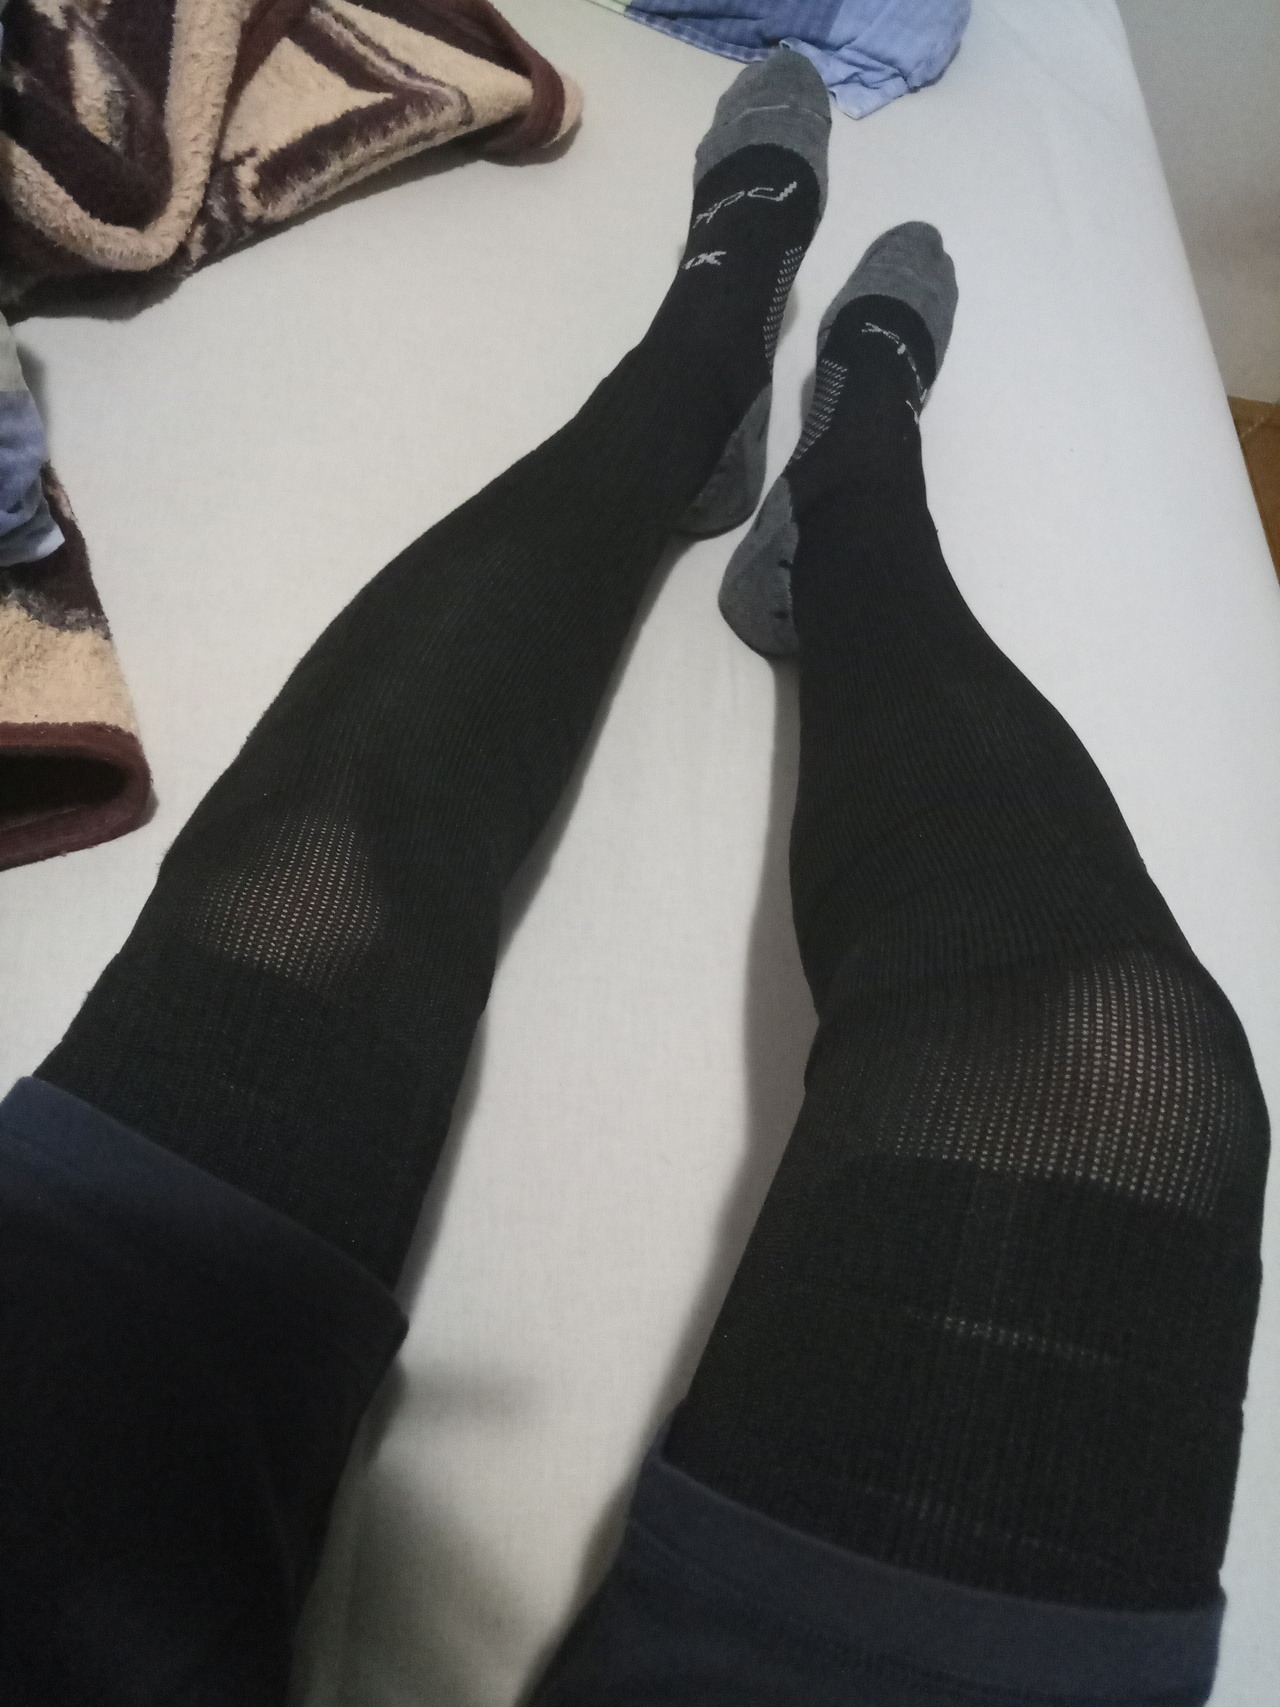 Very long or thigh football socks